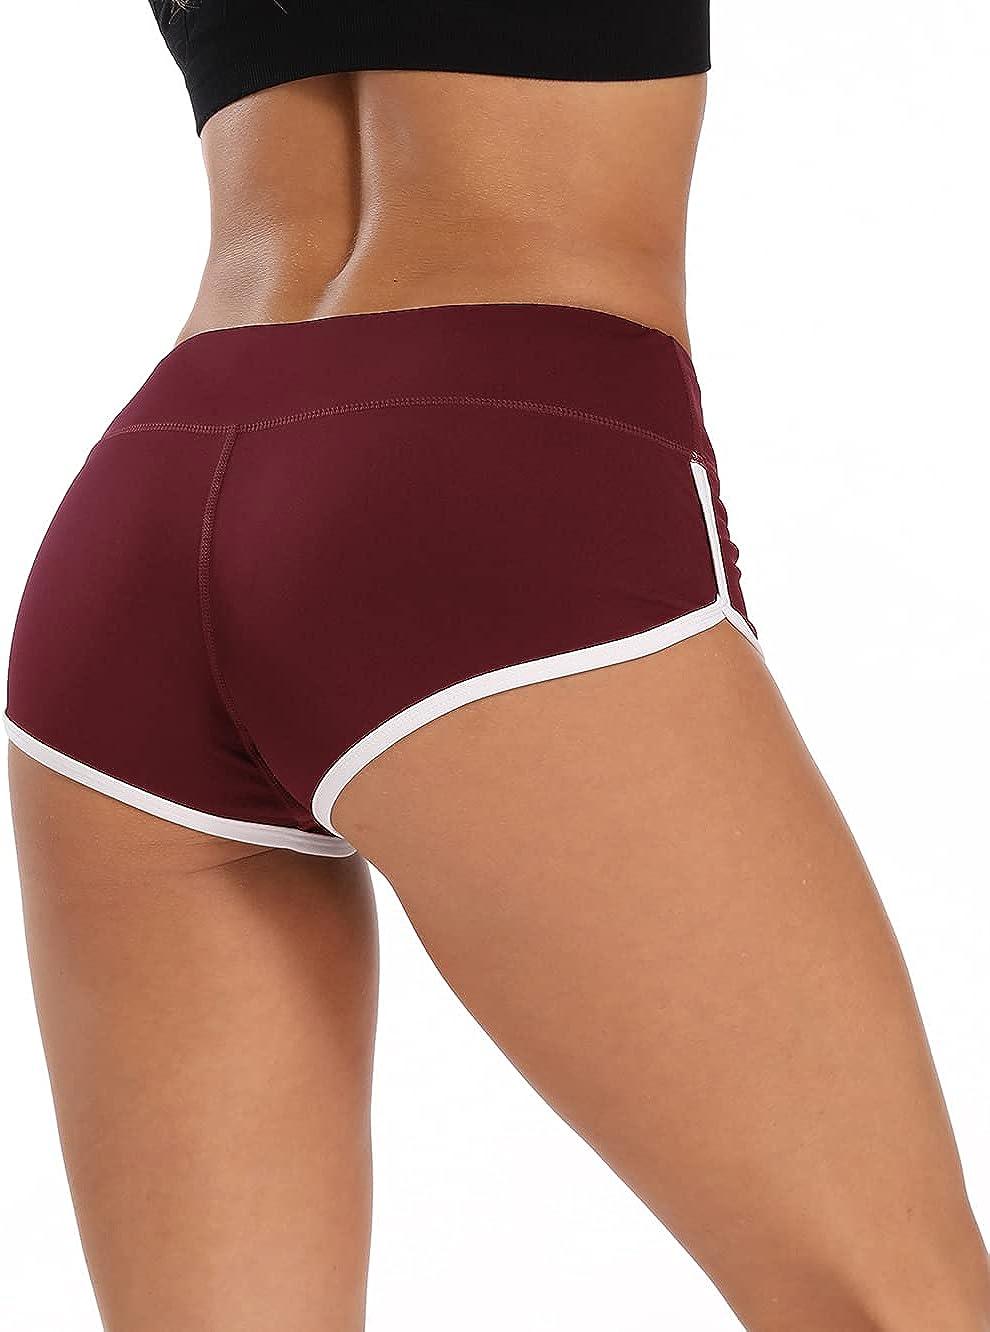 ENEESSI Women's Booty Shorts Workout Butt Lifting High Waist Yoga Running  Gym Shorts Wine Red/White XX-Large Short